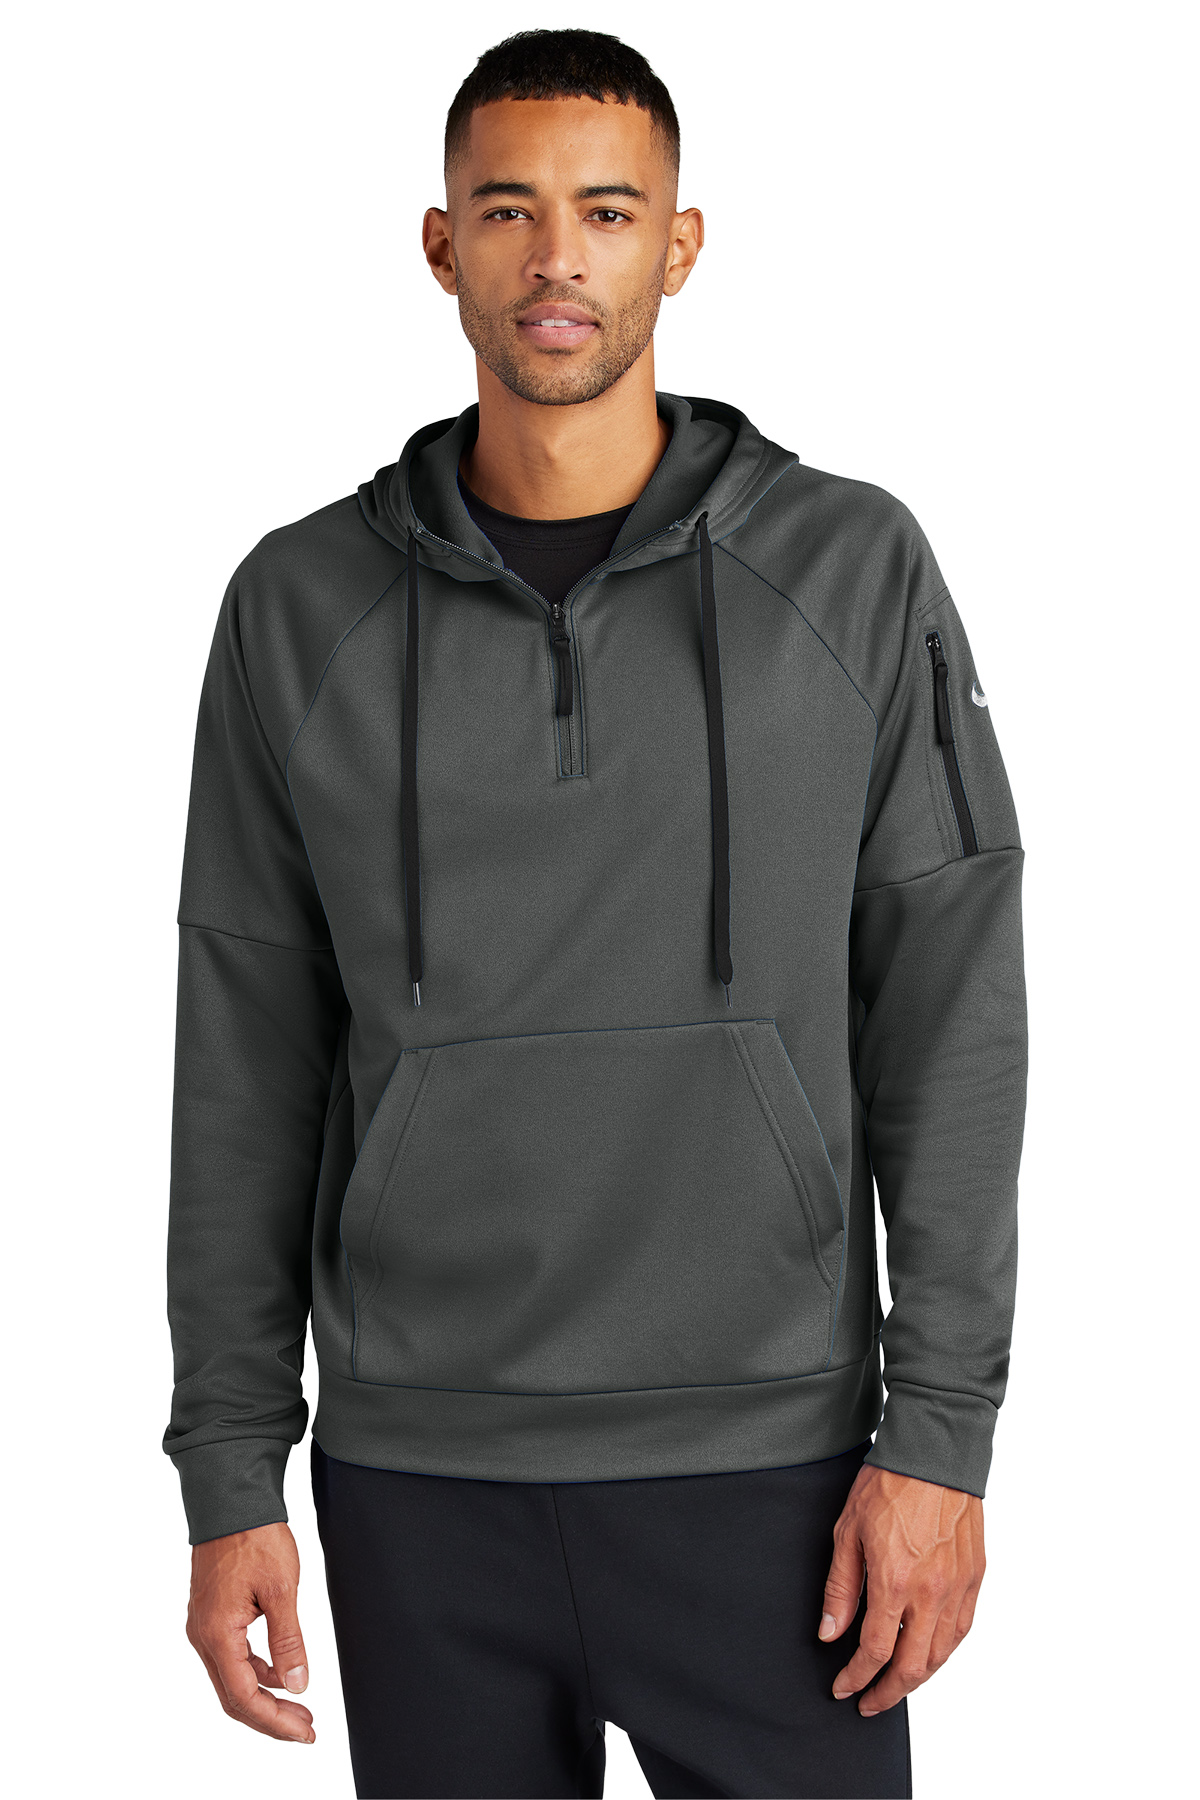 Nike Men's Therma-FIT Pocket 1/4-Zip Fleece Hoodie